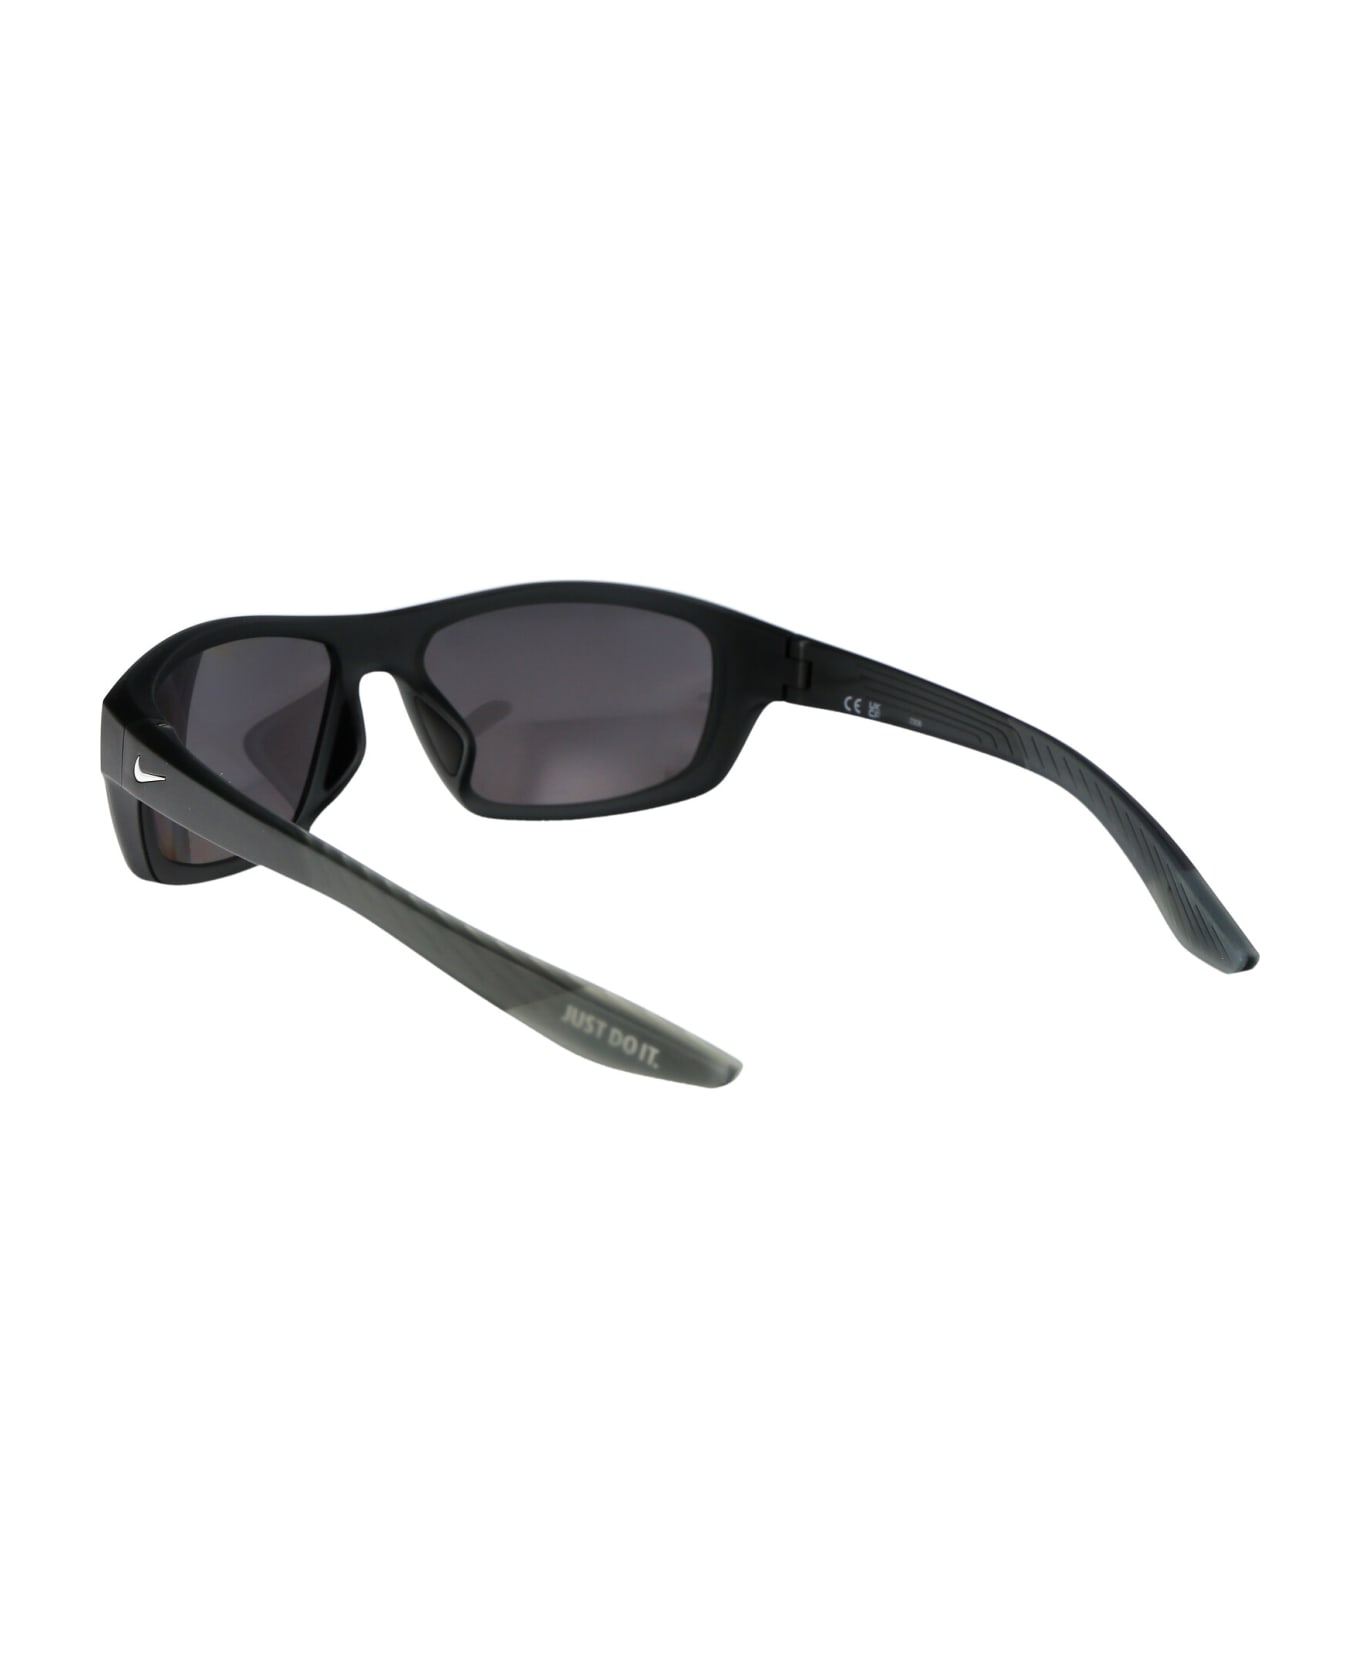 Nike Brazen Boost Sunglasses - 060 MATTE ANTHRACITE GRIS MAT